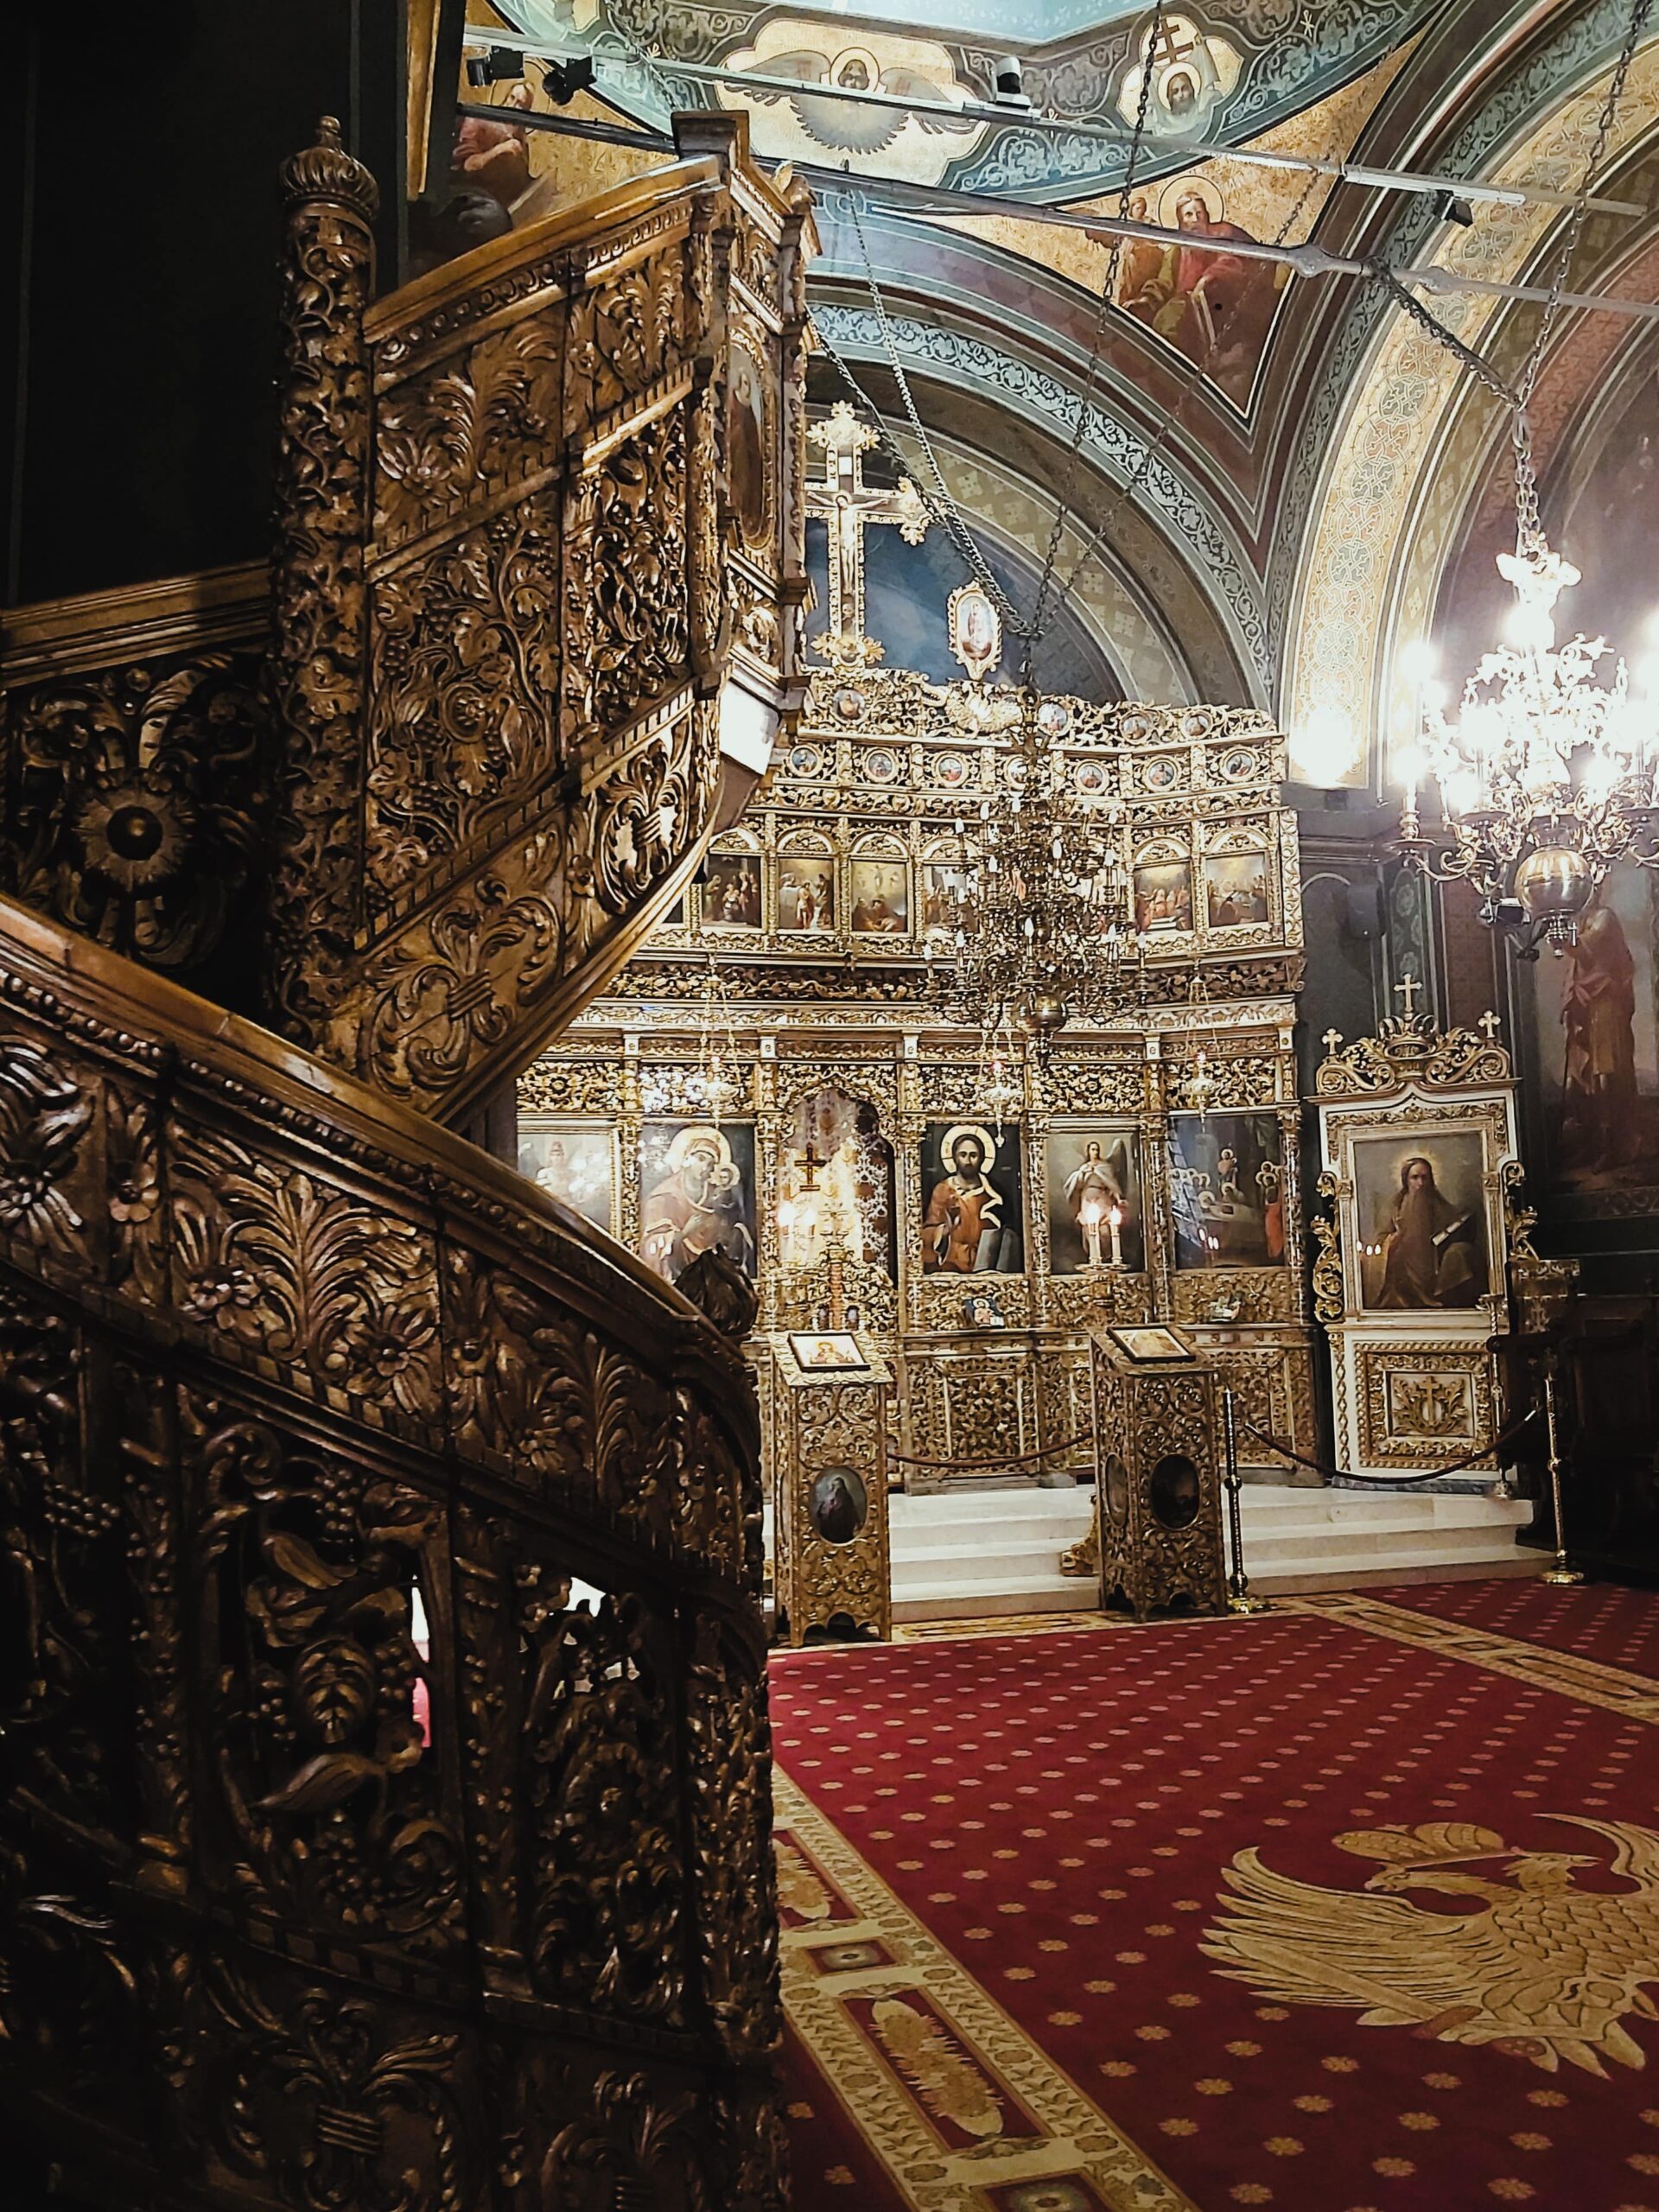 Wooden stairs and golden iconostasis in Biserica Albă in București, Romania